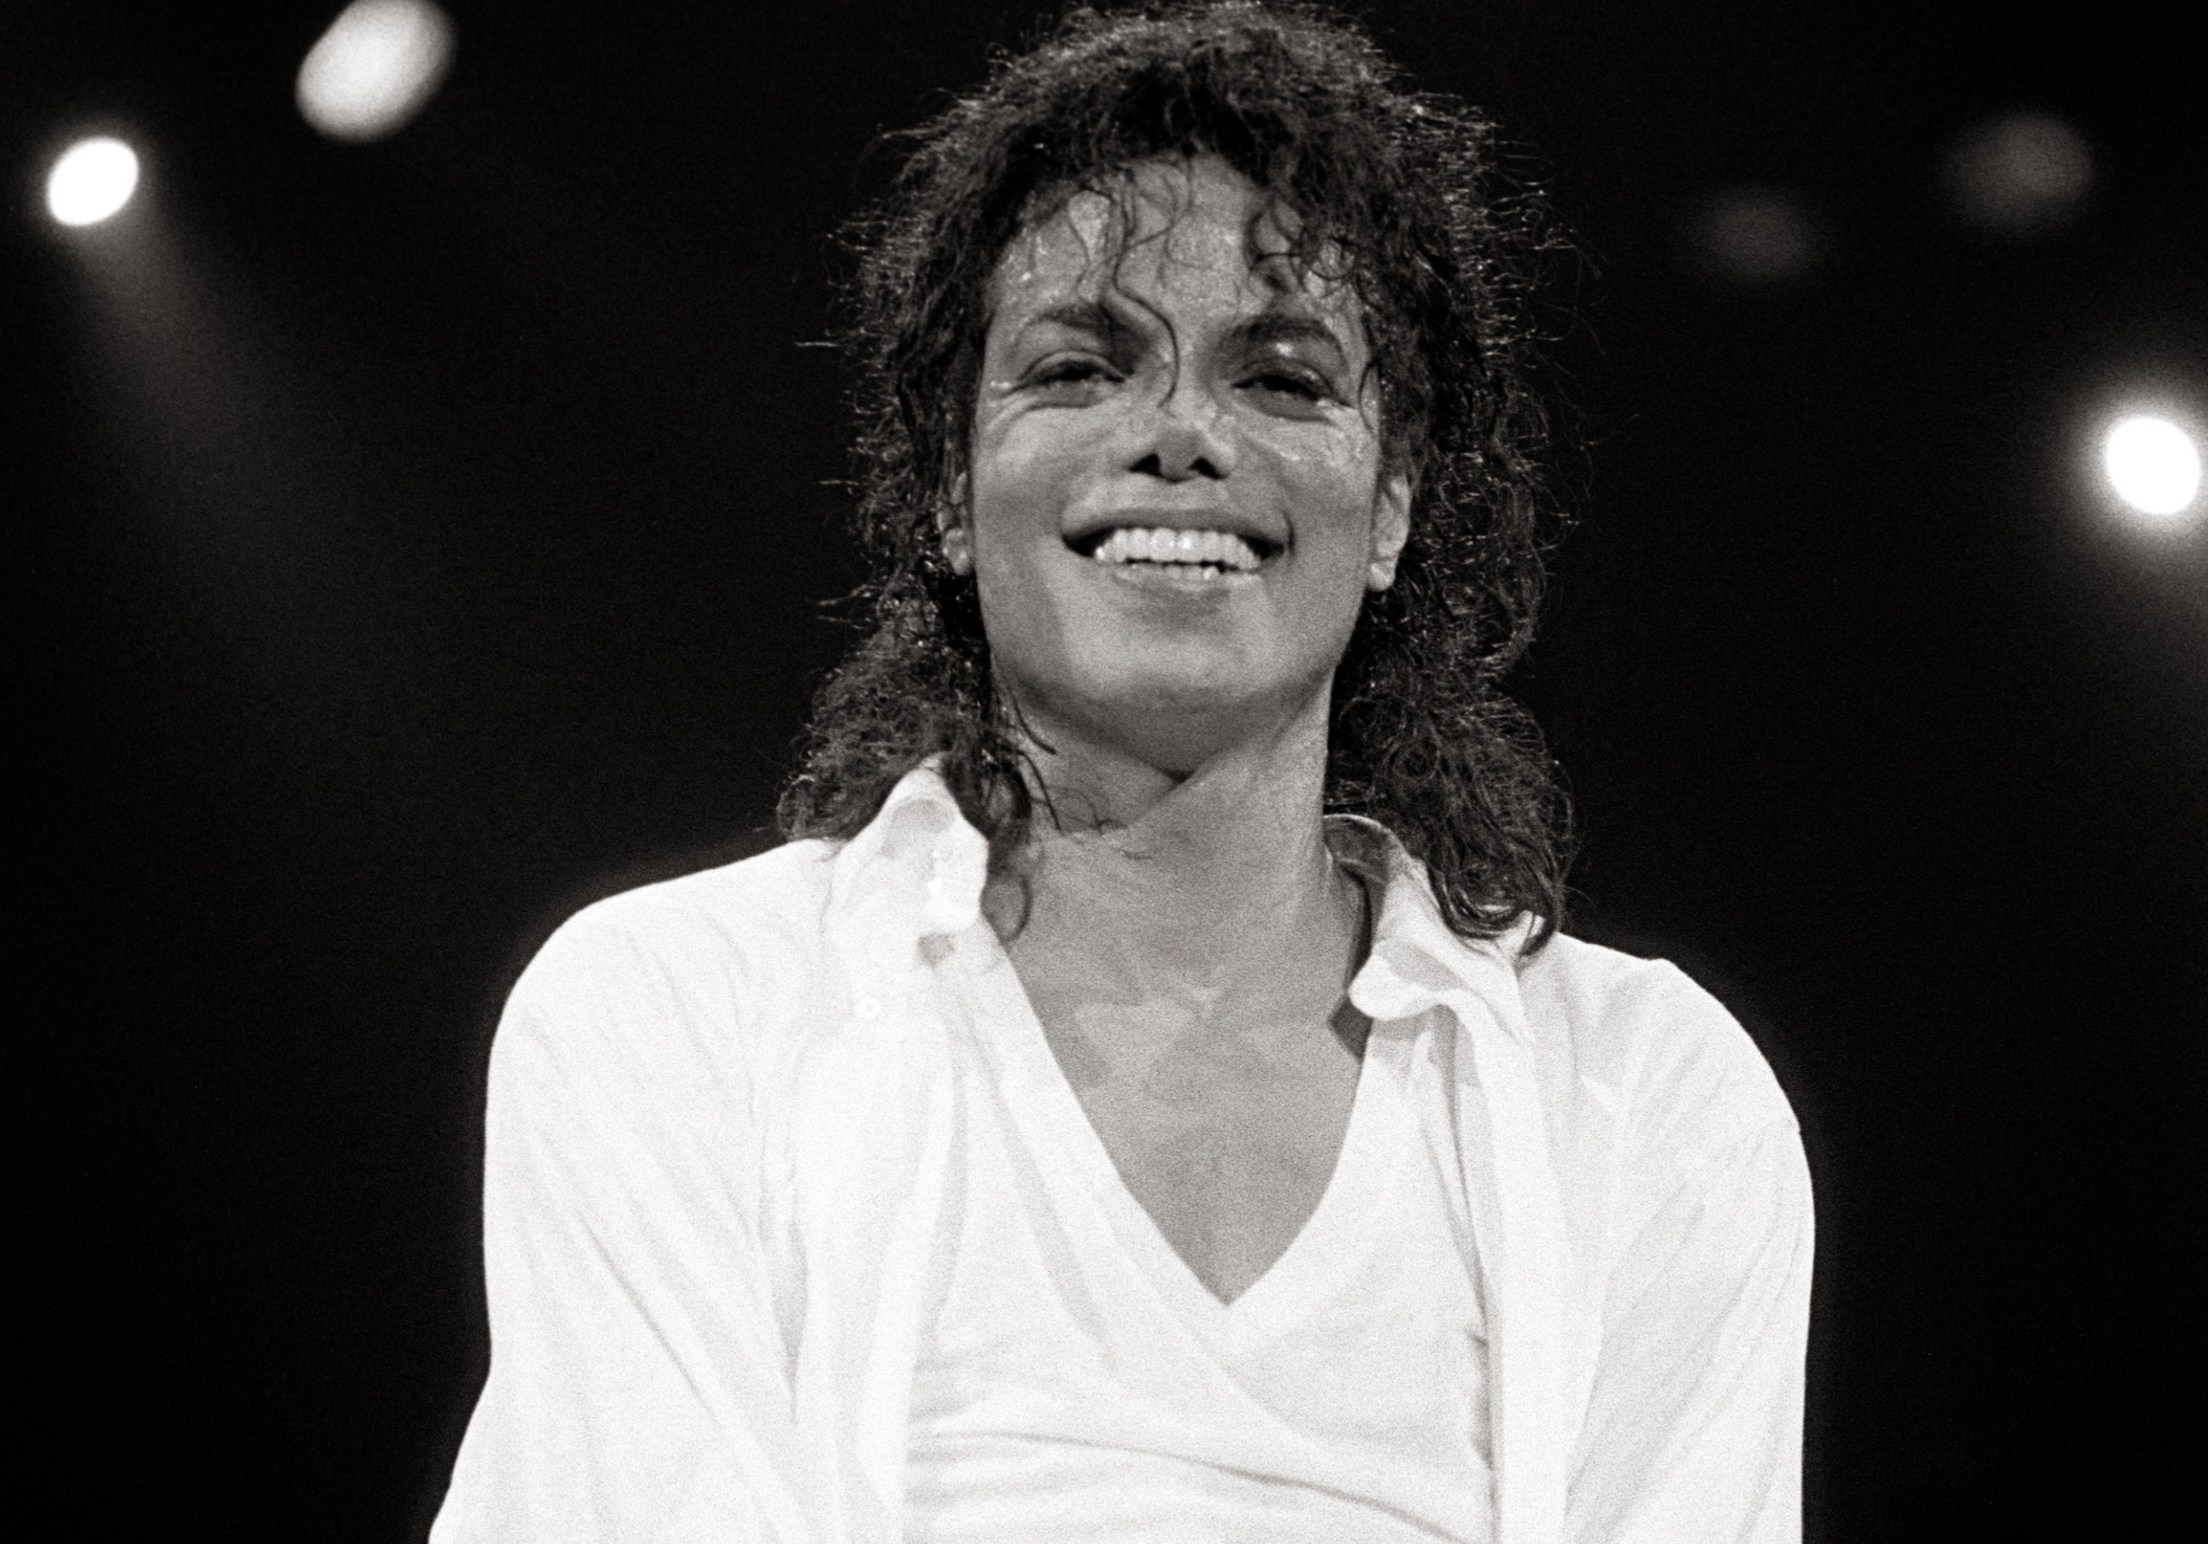 Michael jackson video. Певец Джексон. Michael Jackson фото.